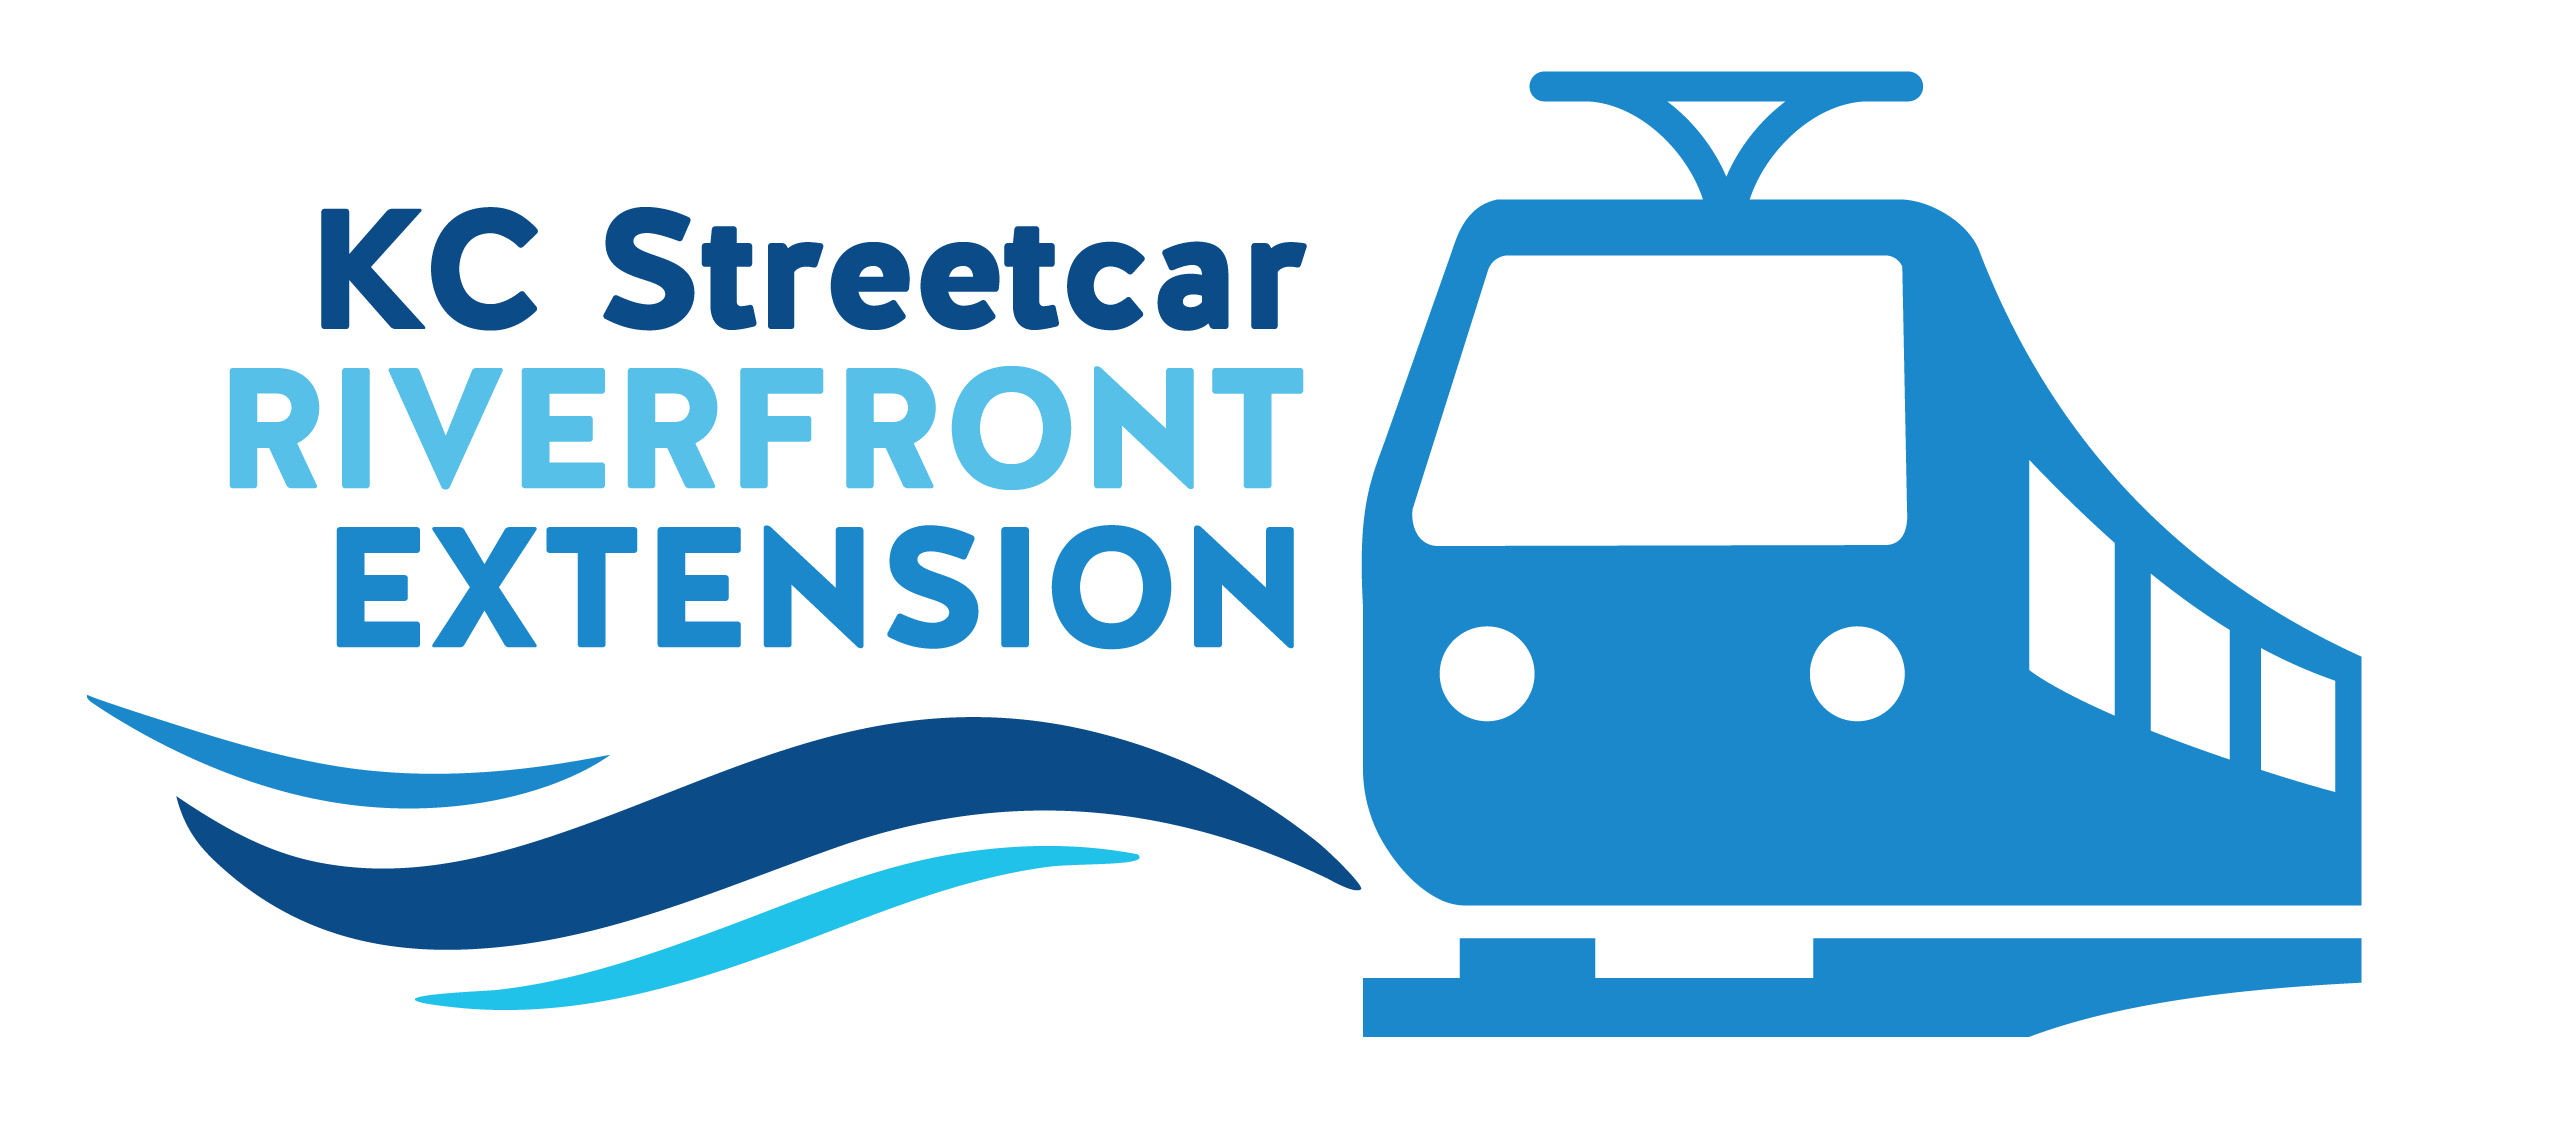 KC Streetcar Riverfront Extension